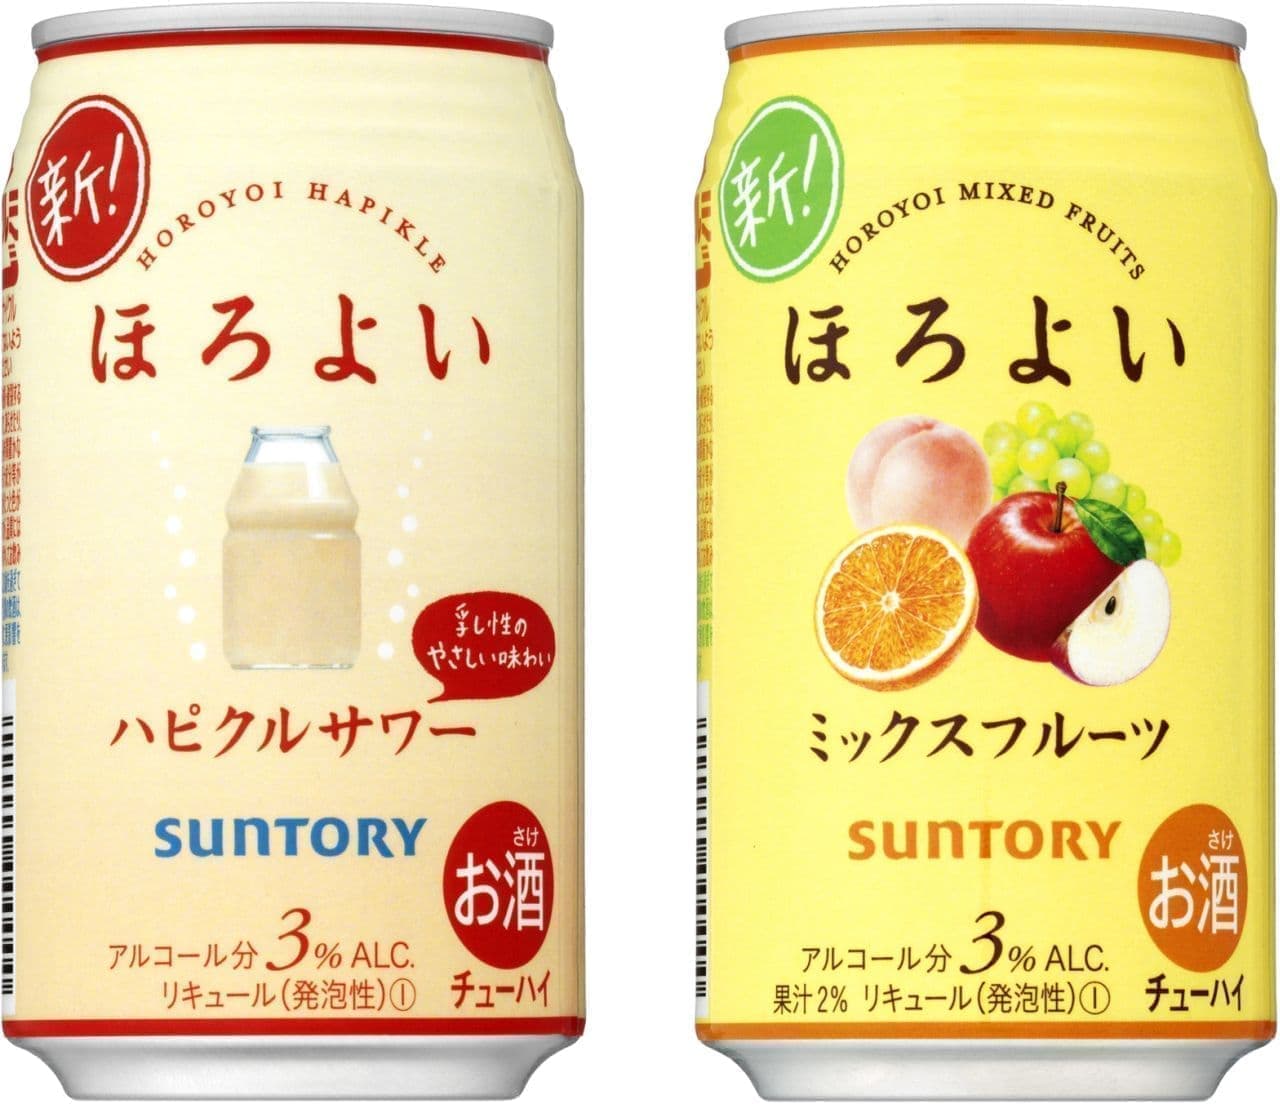 Suntory "Horoyoi [Hapicle Sour]" and "Horoyoi [Mixed Fruit]"